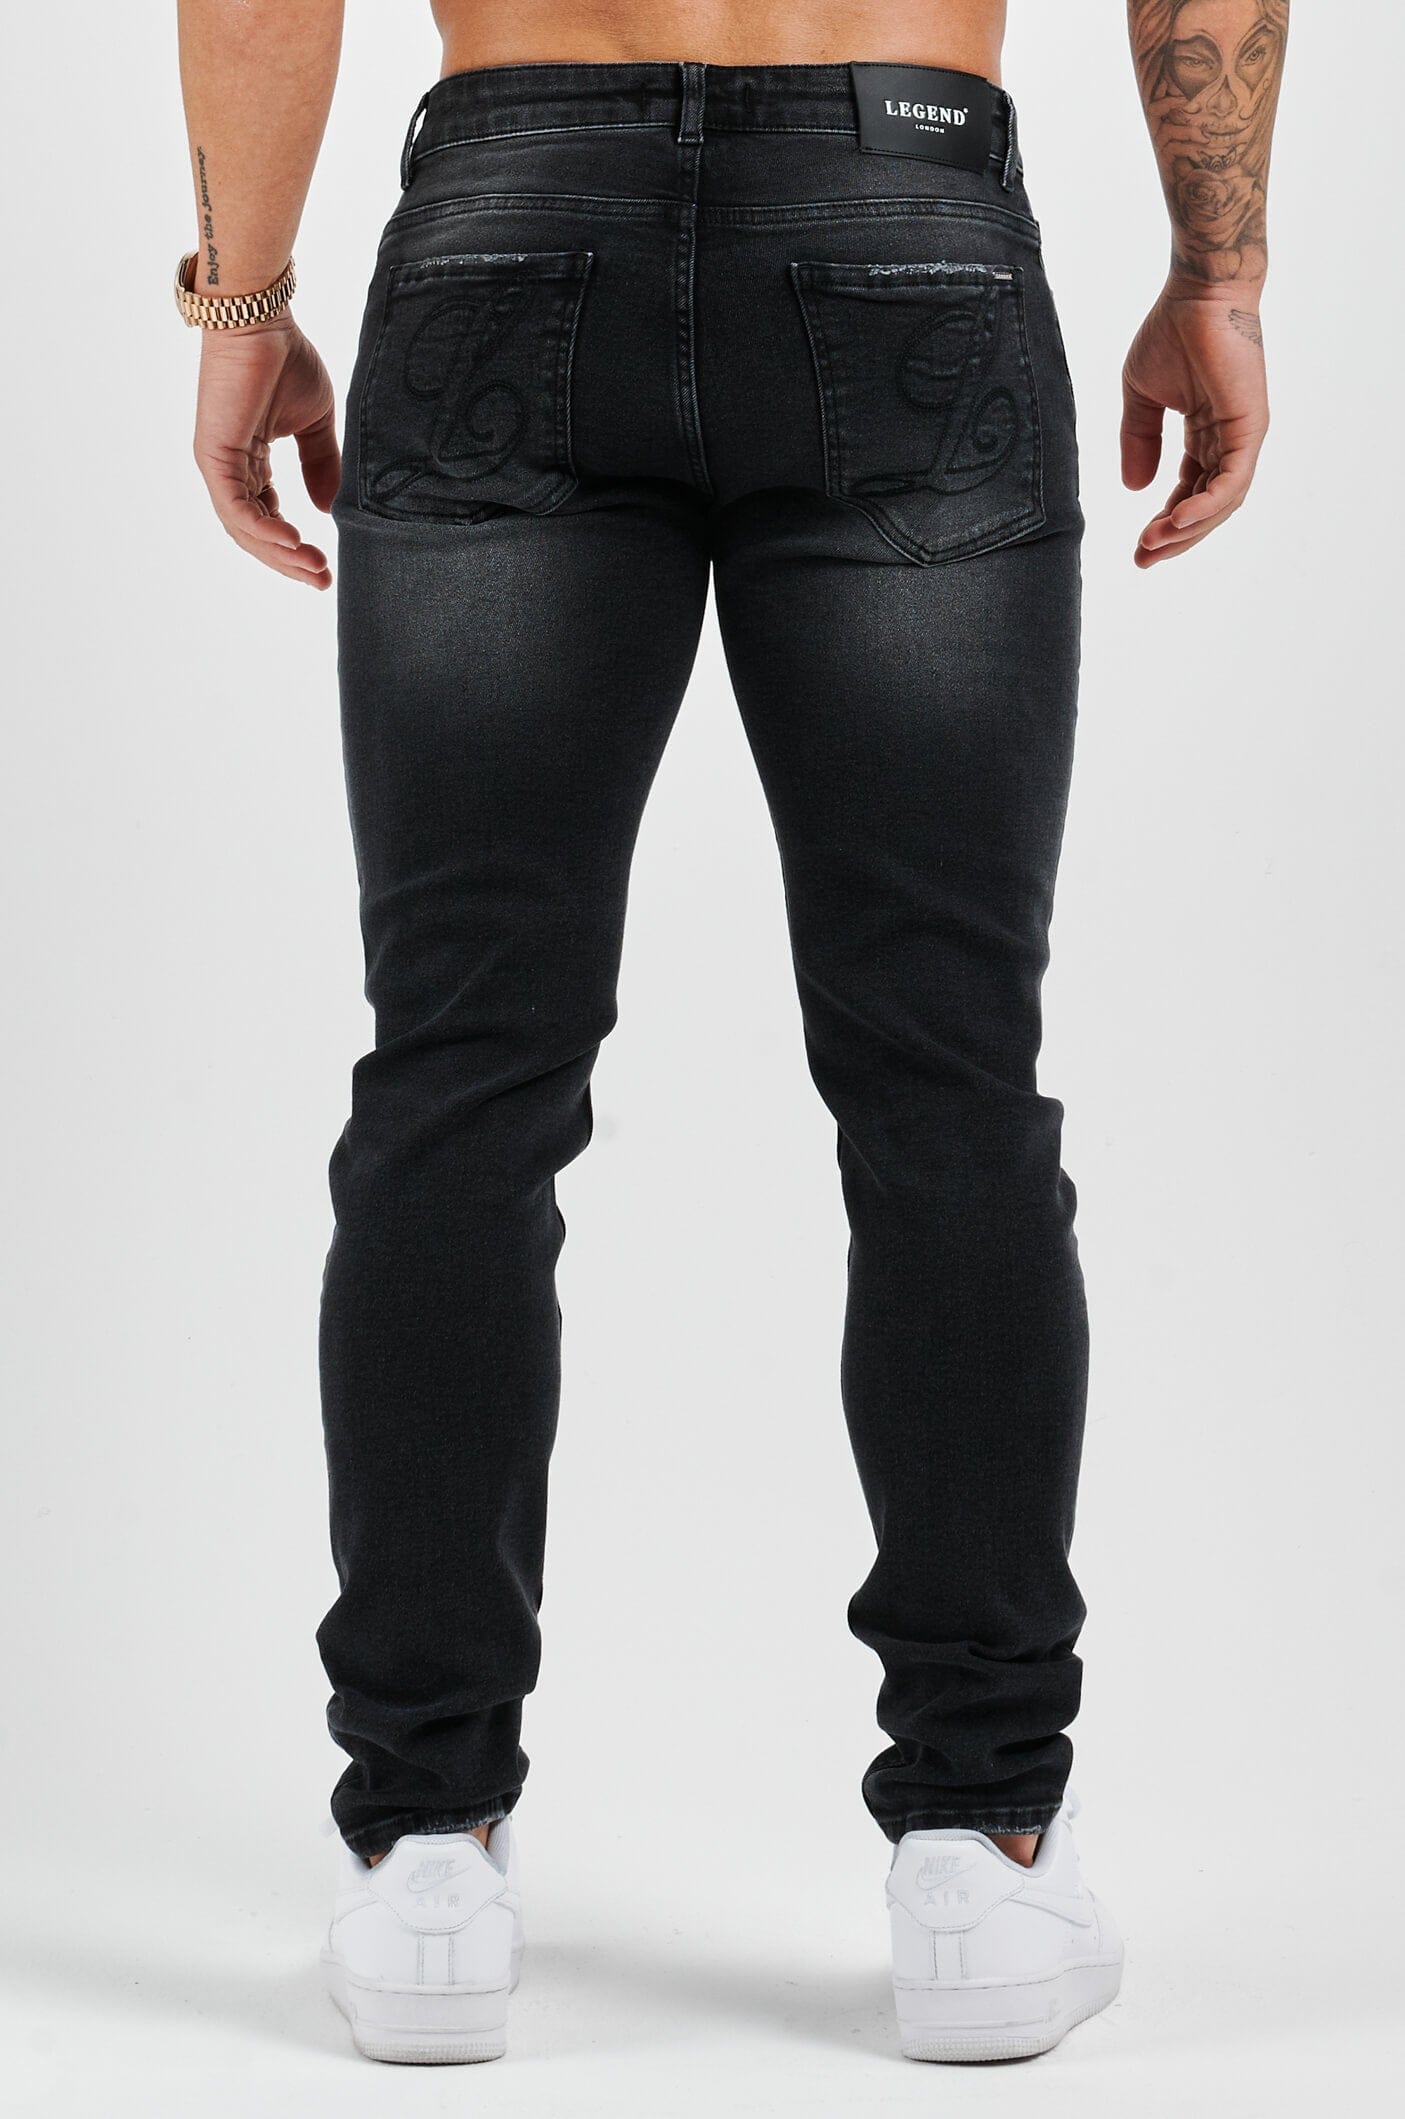 Legend London Jeans - slim 2.0 SLIM FIT JEANS 2.0 DISTRESSED - GREY WASH